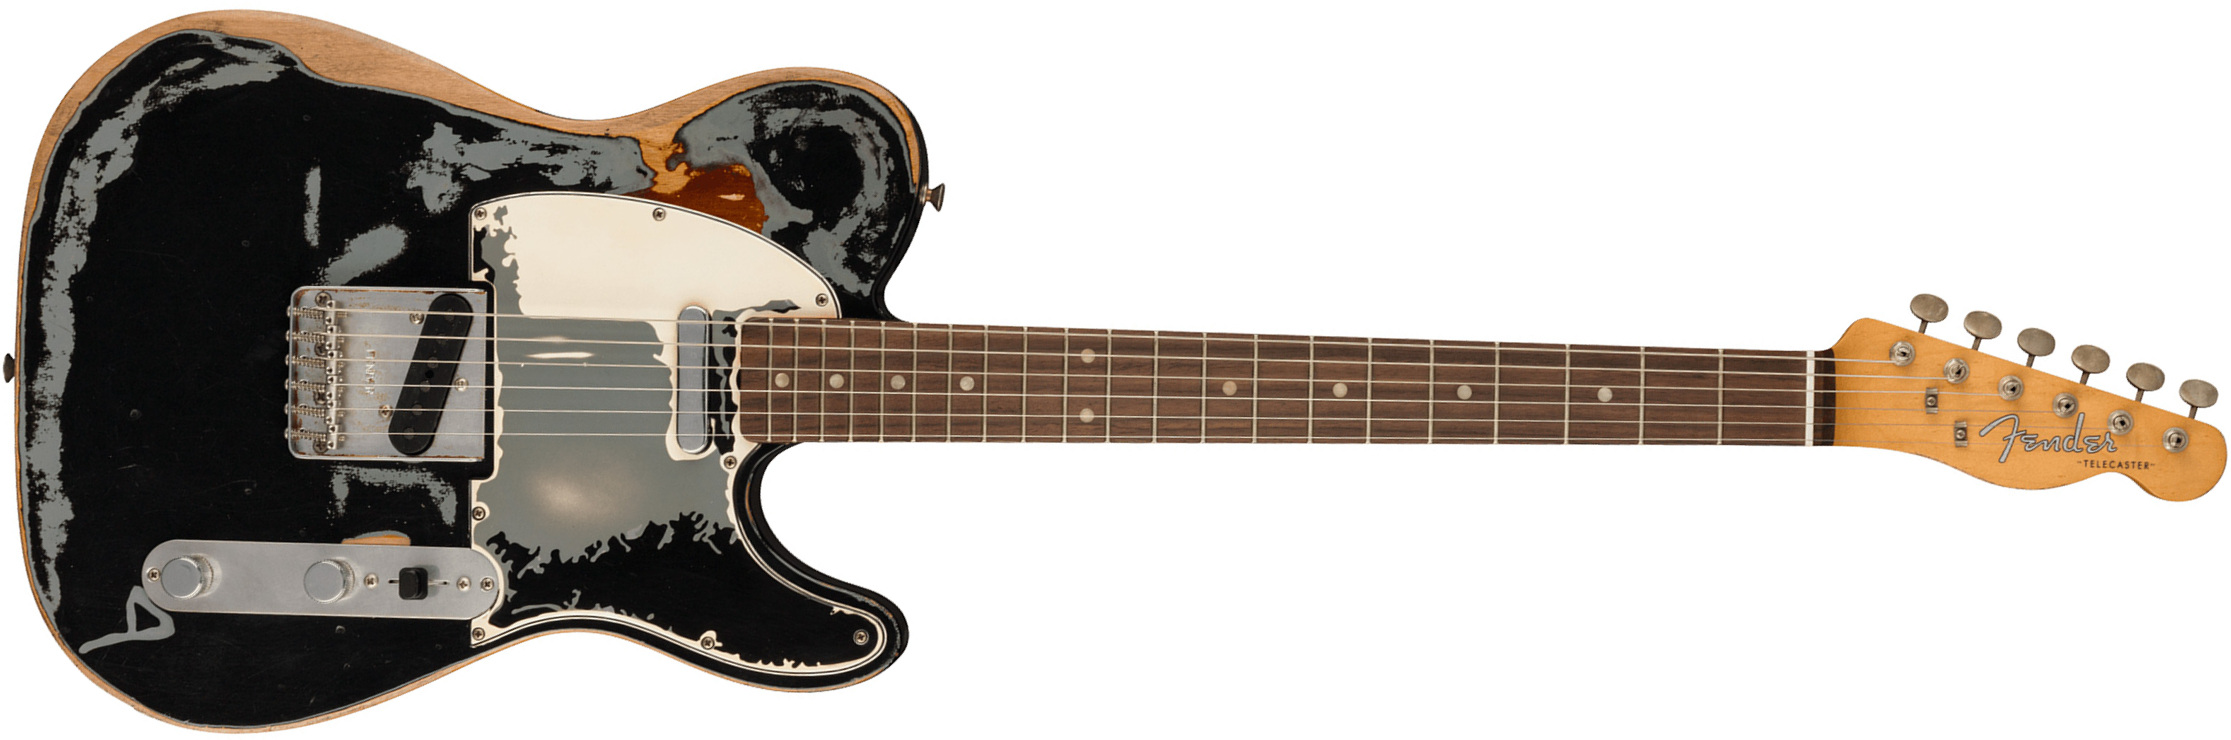 Fender Joe Strummer Tele Mex Signature 2s Ht Rw - Road Worn Black Over 3-color Sunburst - Tel shape electric guitar - Main picture